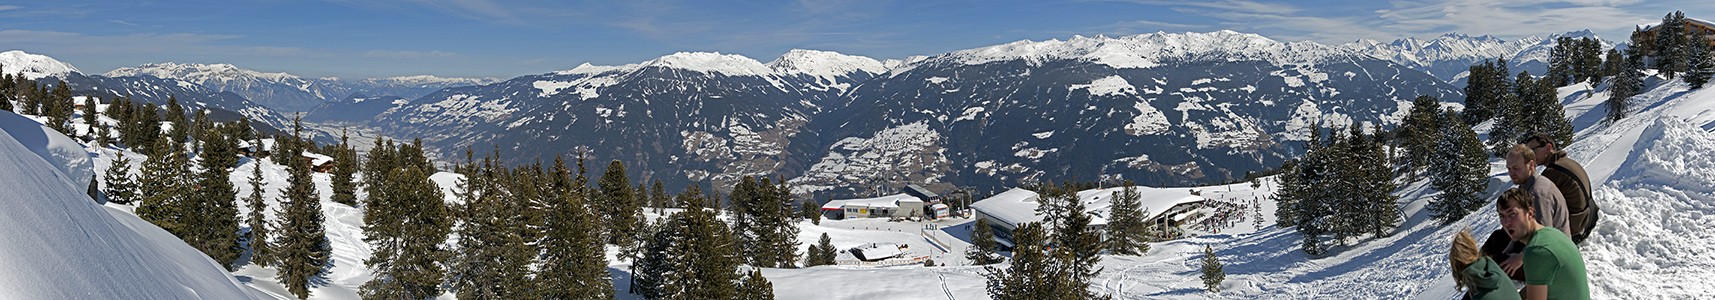 Kitzbüheler Alpen Hochzillertal